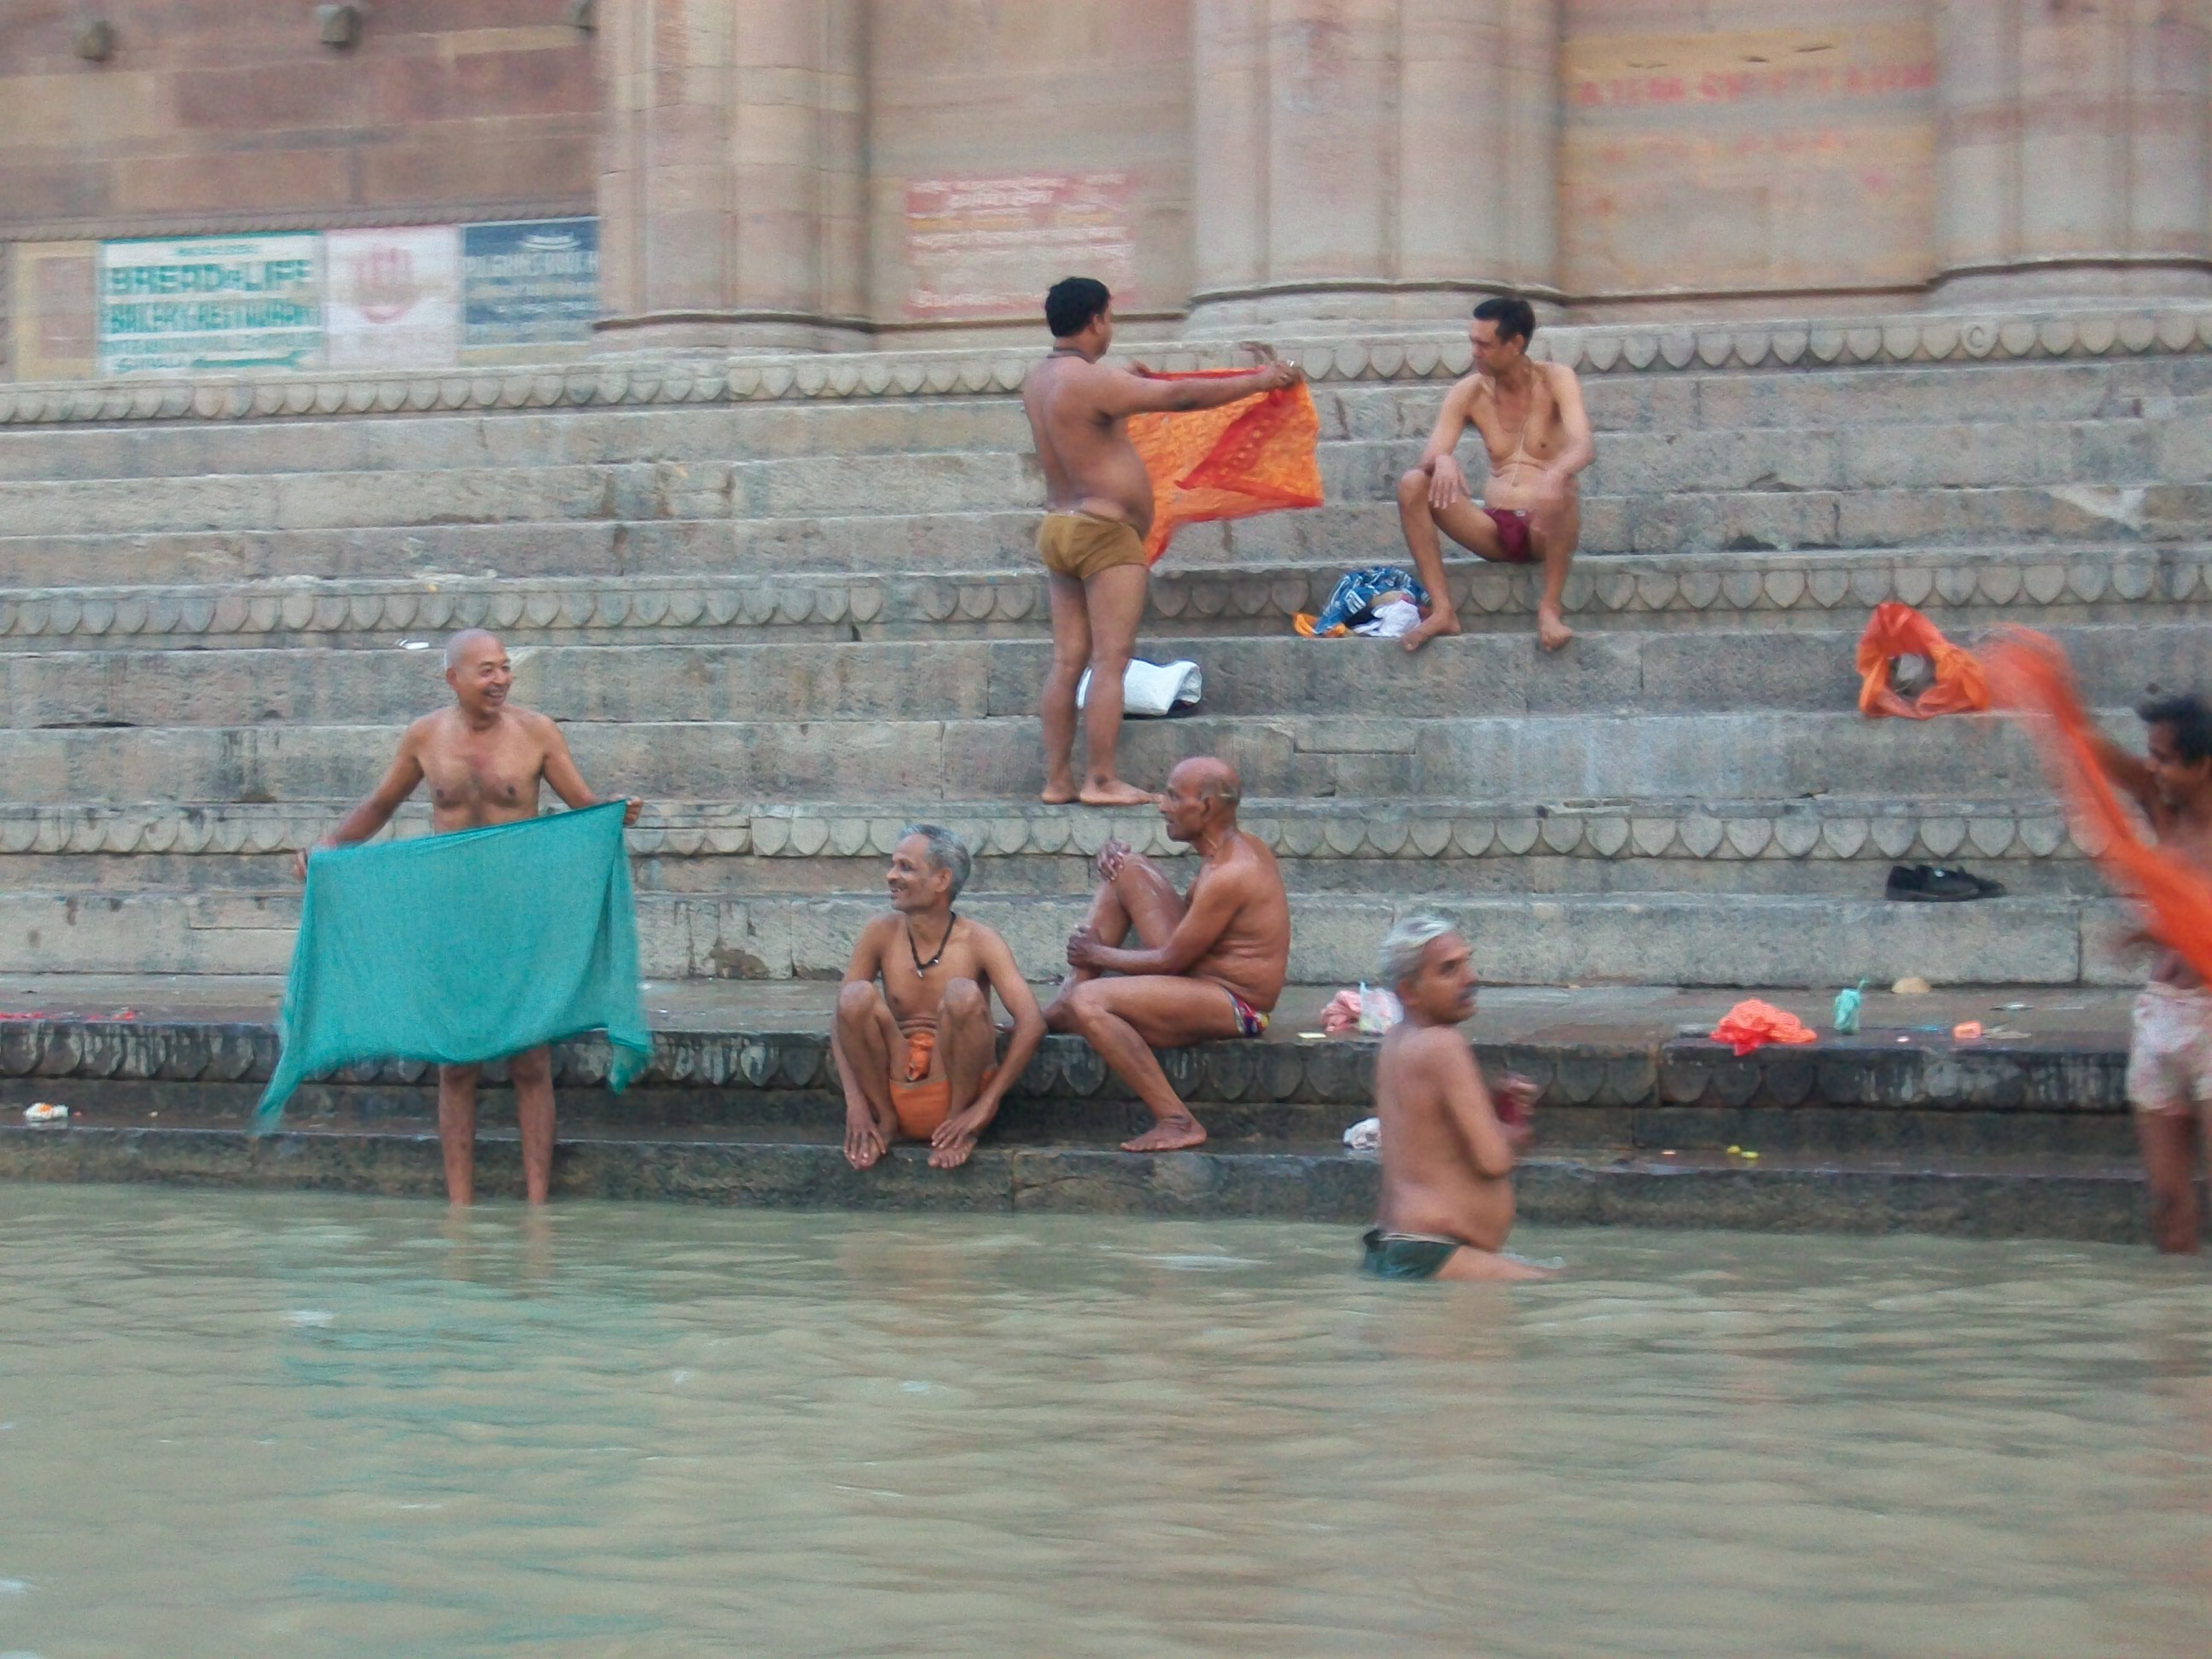 Gange a Varanasi